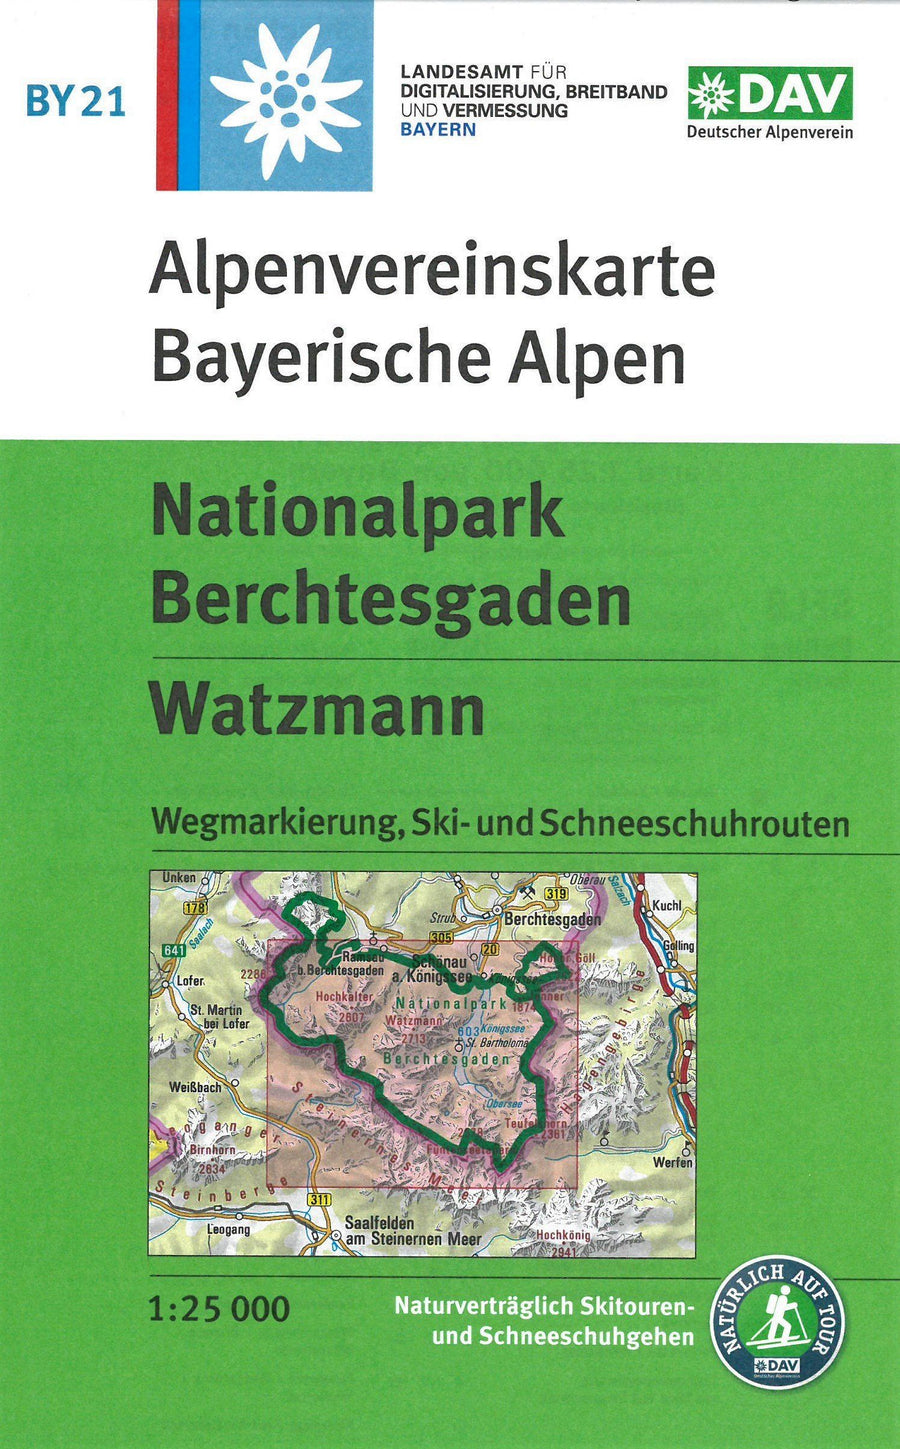 Carte de randonnée & ski - Berchtesgaden NP Watzmann, n° BY21 (Alpes bavaroises) | Alpenverein carte pliée Alpenverein 